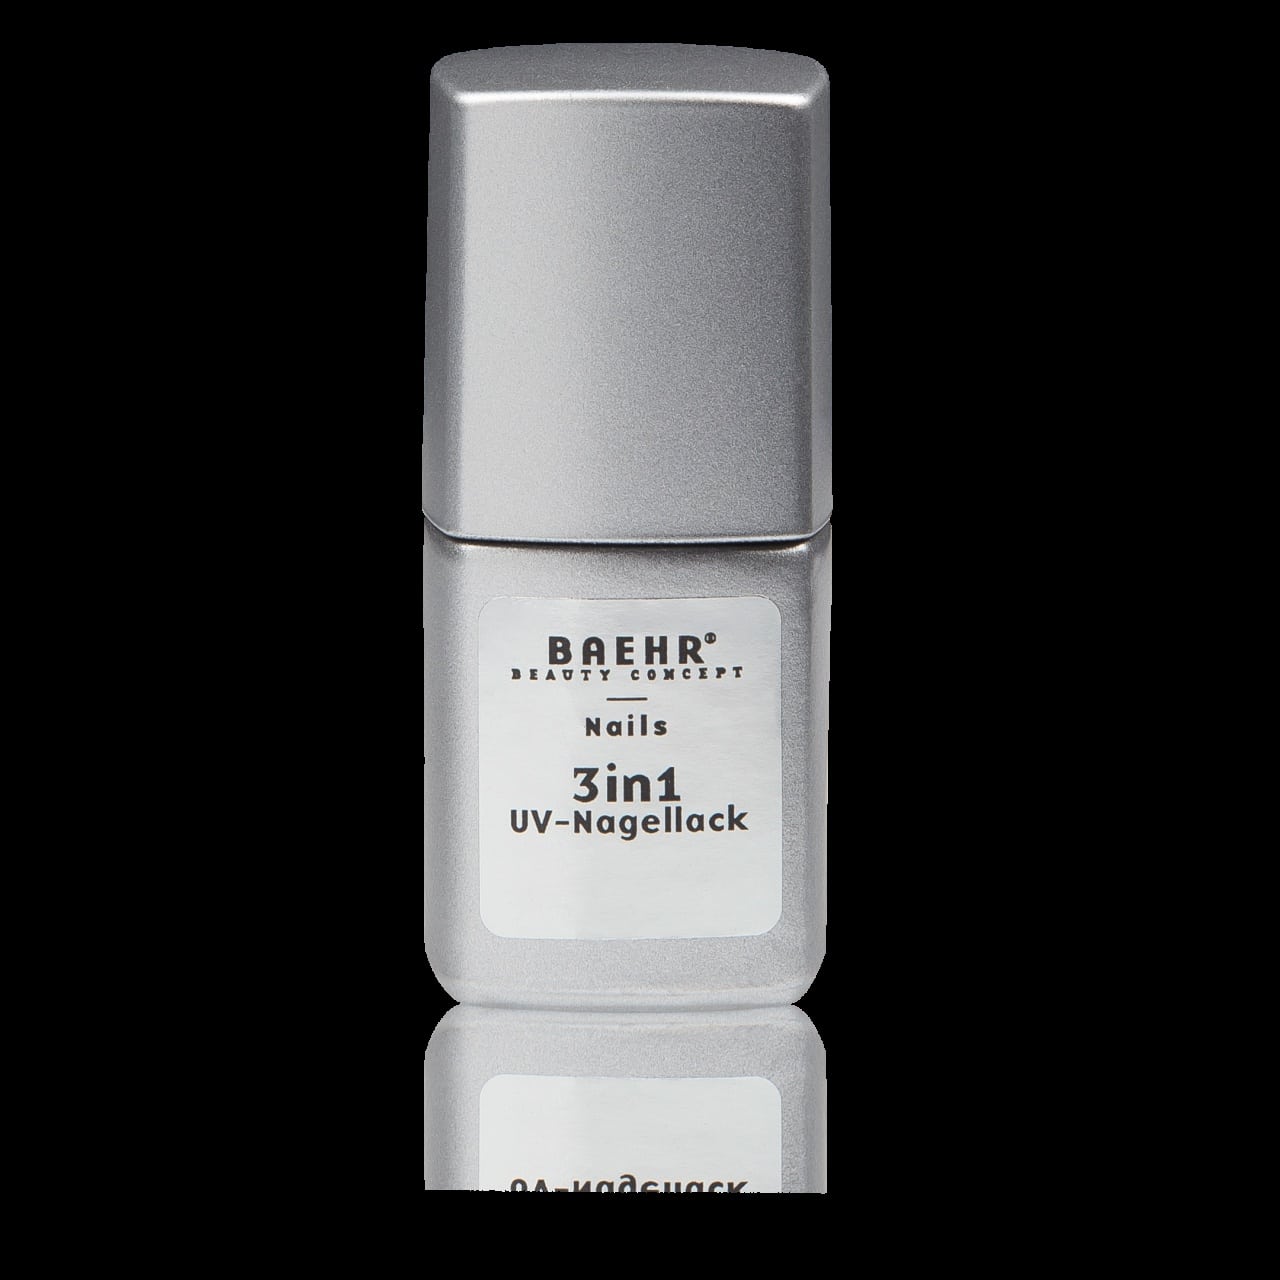 beahr-beauty-concept-3in1-uv-nagellack-dark-nude-12-ml